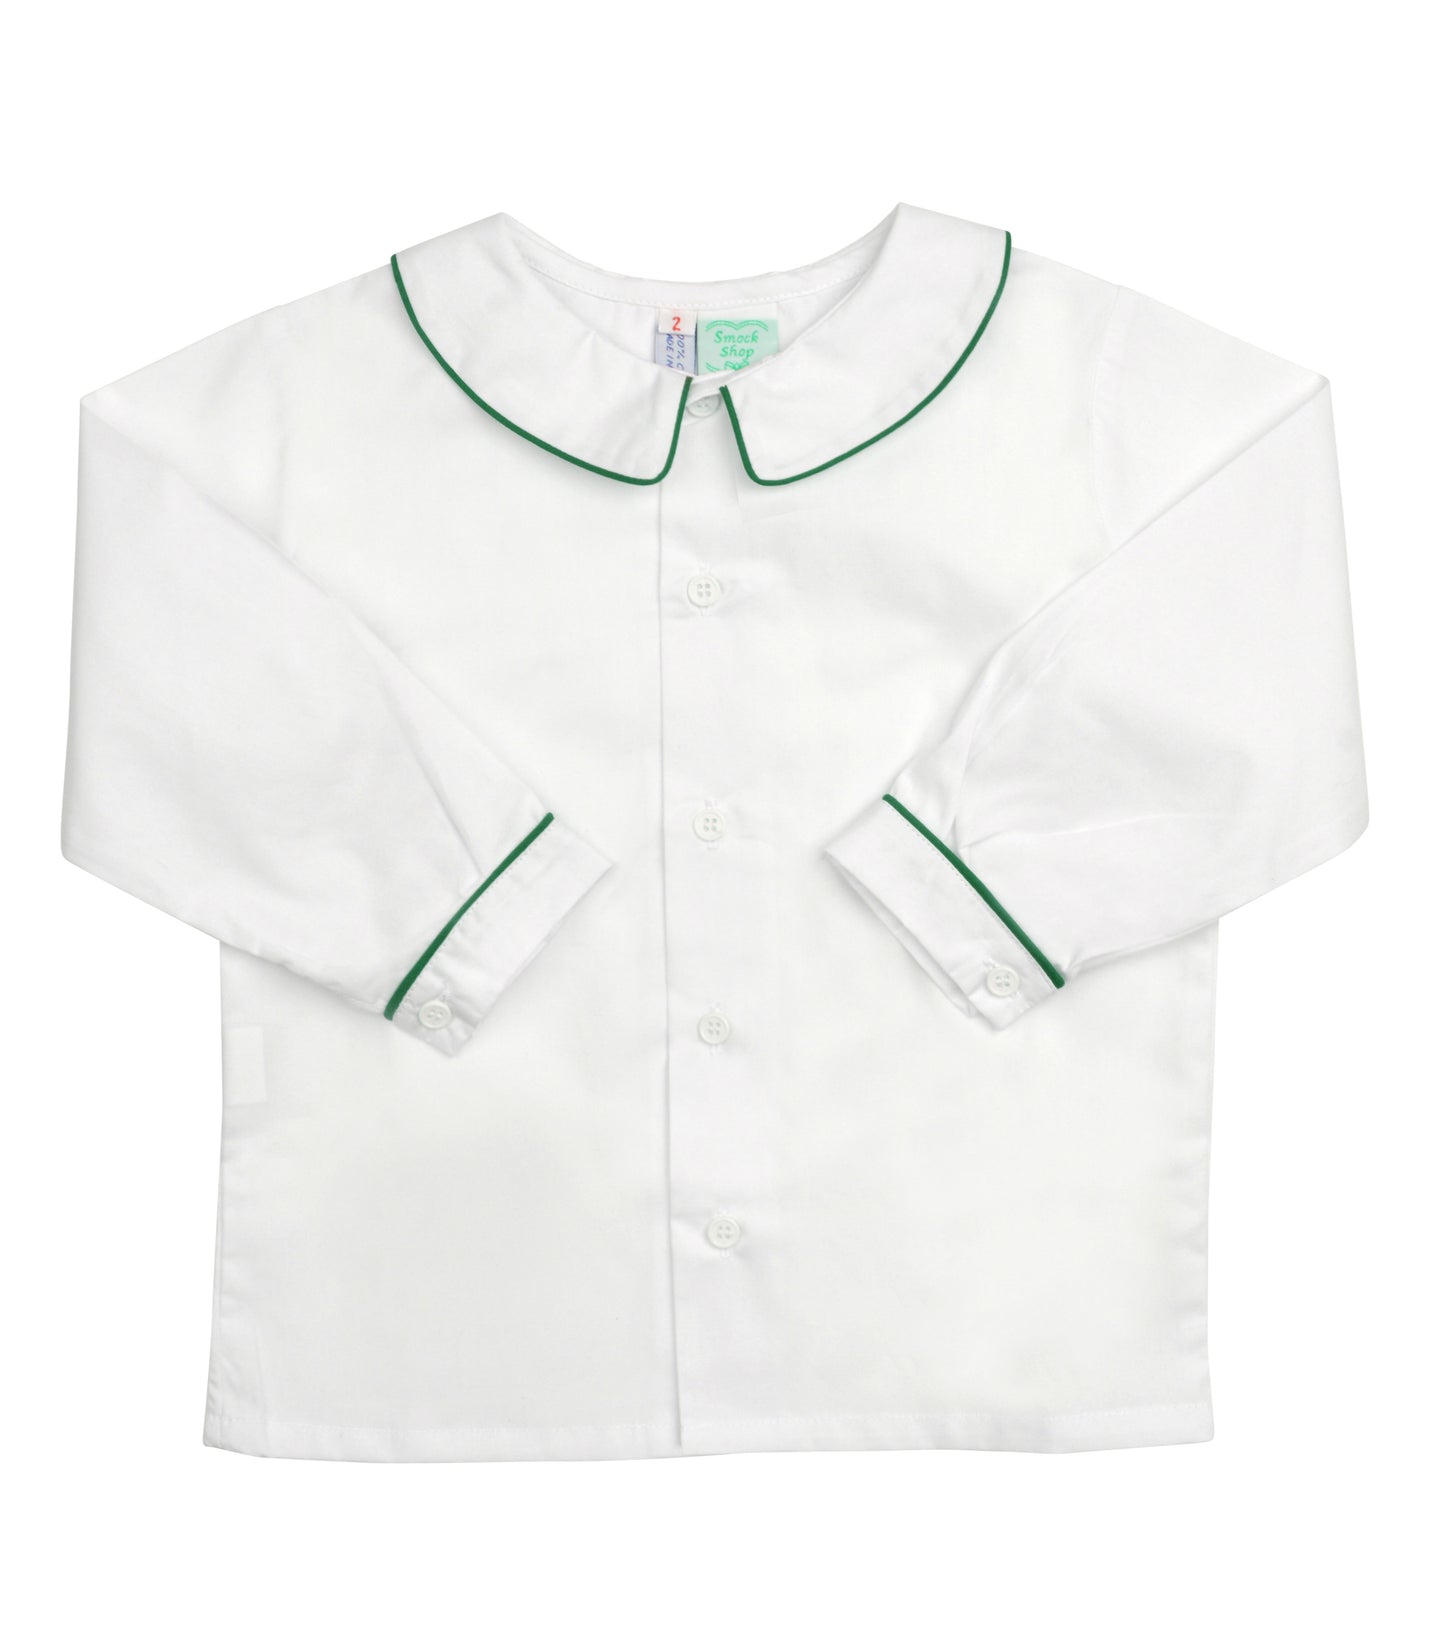 White Peter Pan Collared Shirt with Green Piping - Amelia Brennan